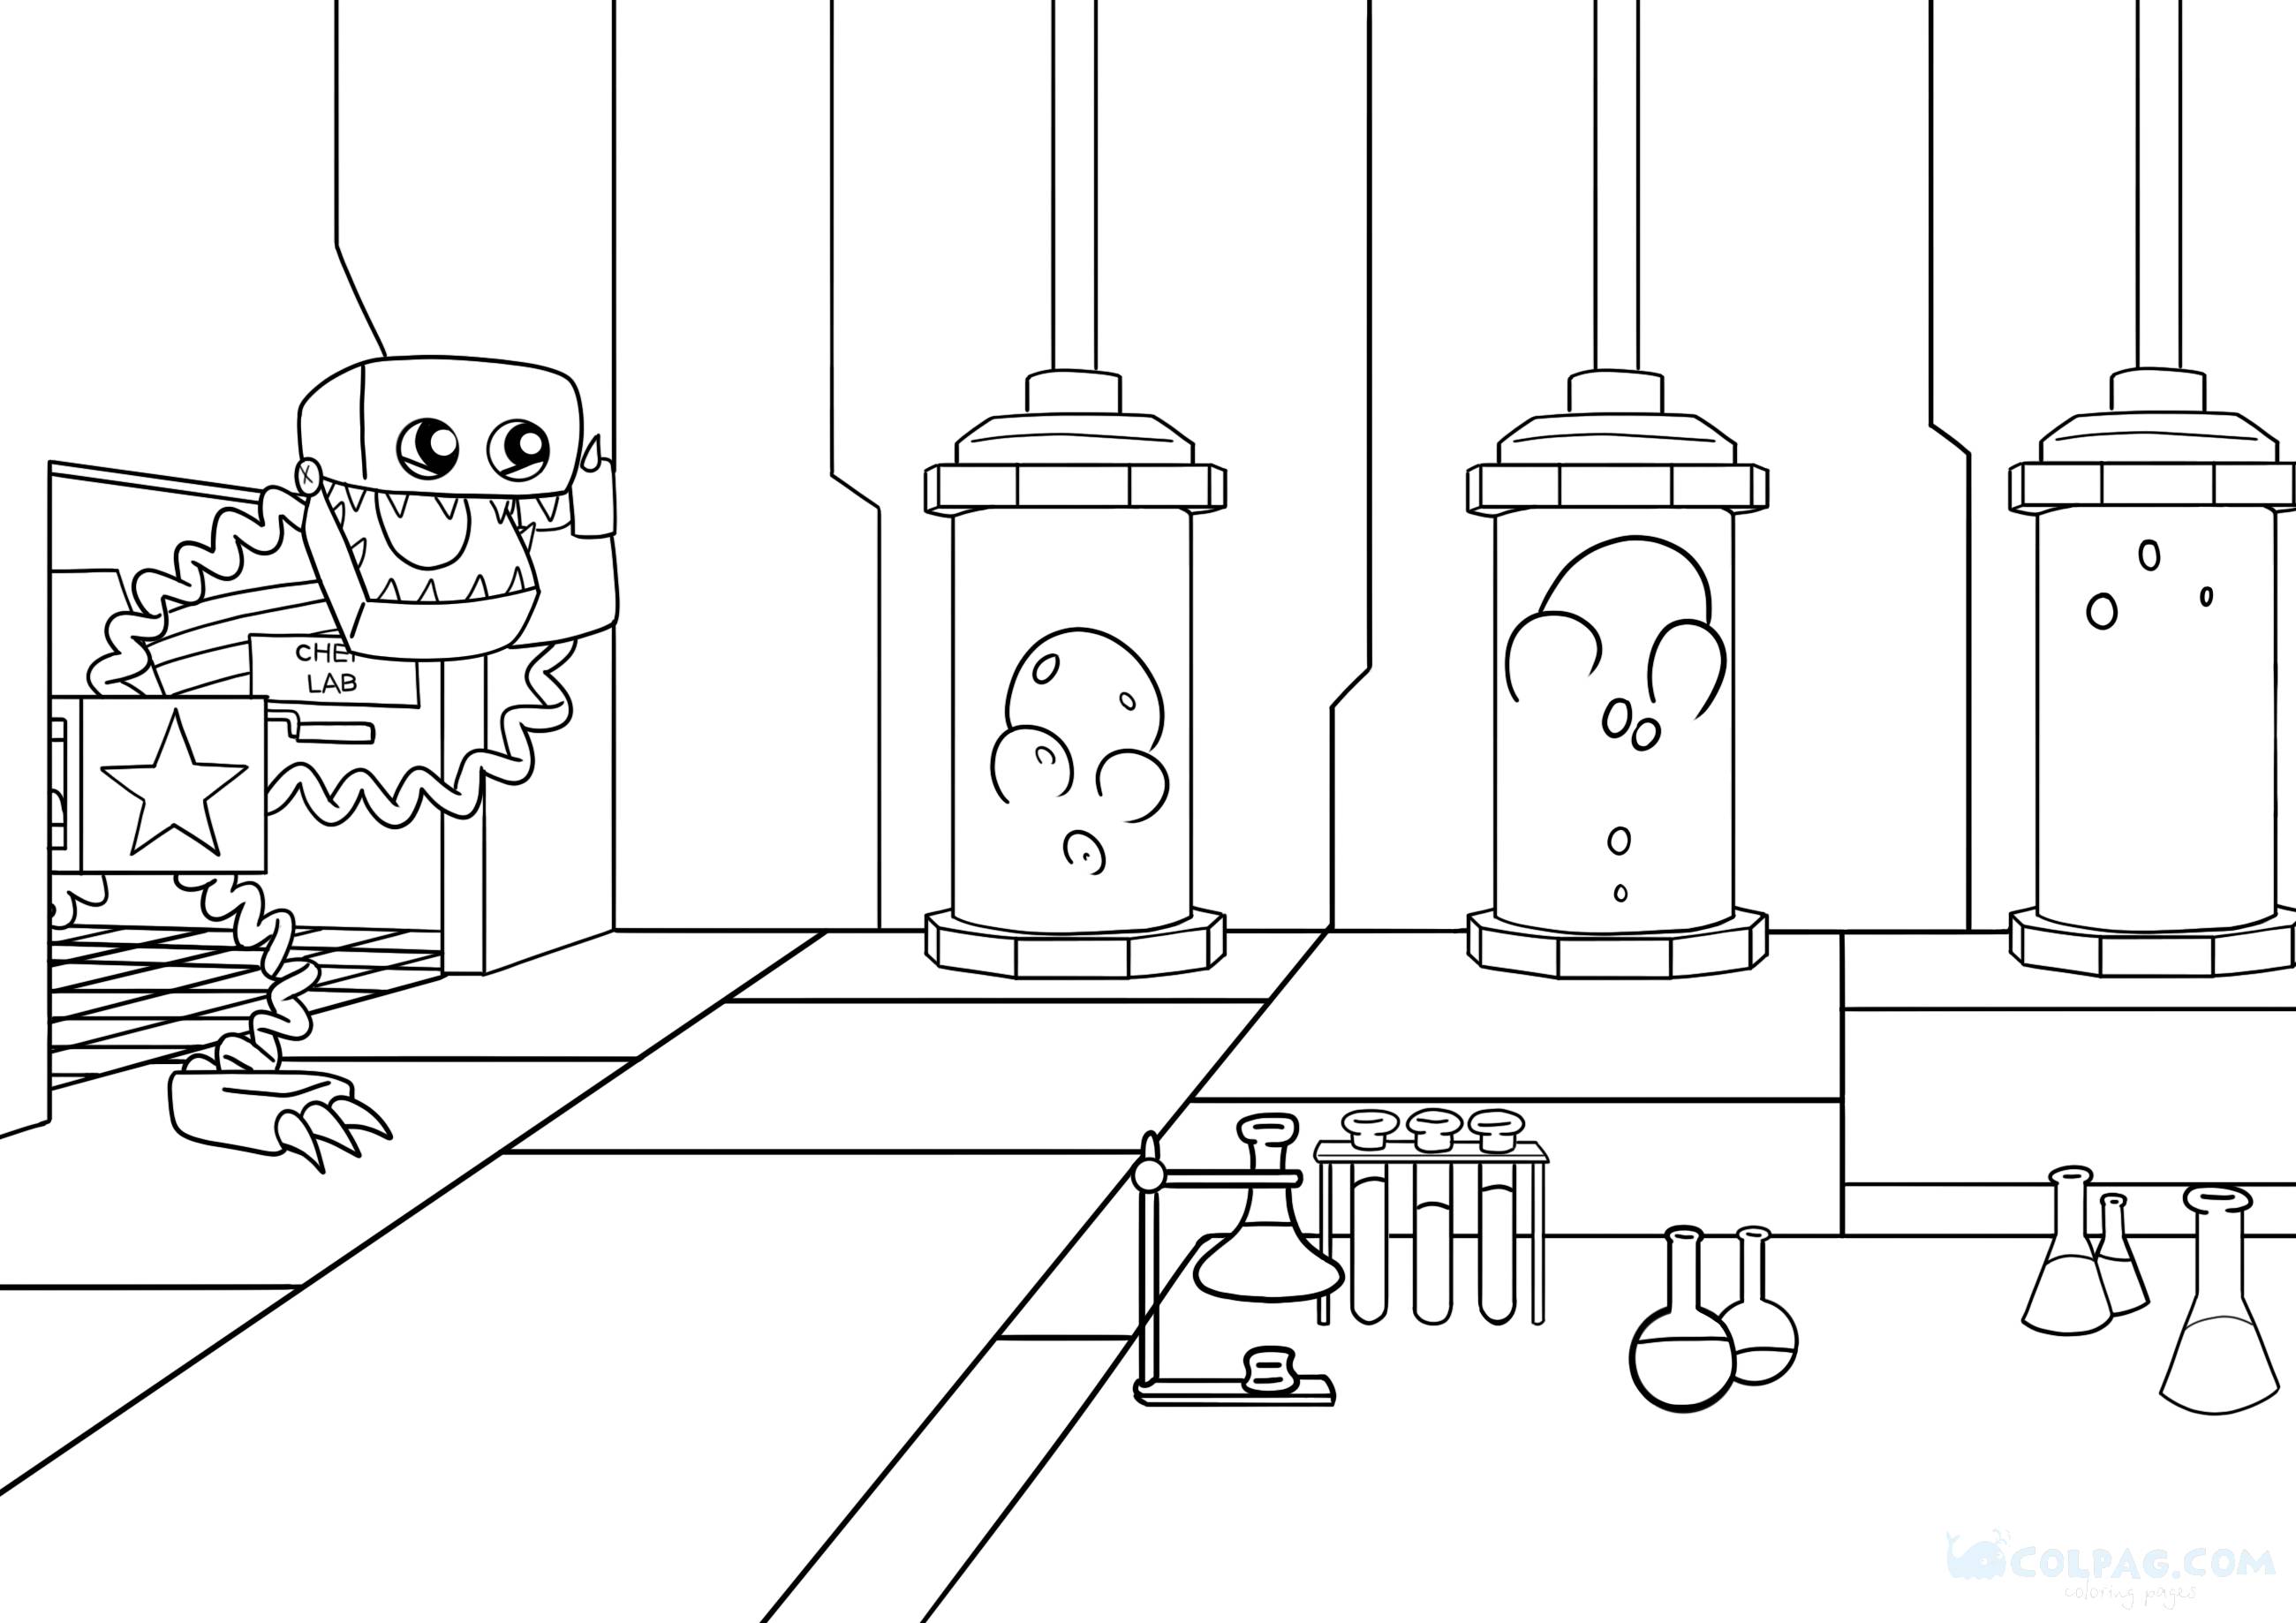 Dibujos para colorear de Boxy Boo (Proyecto: Playtime)